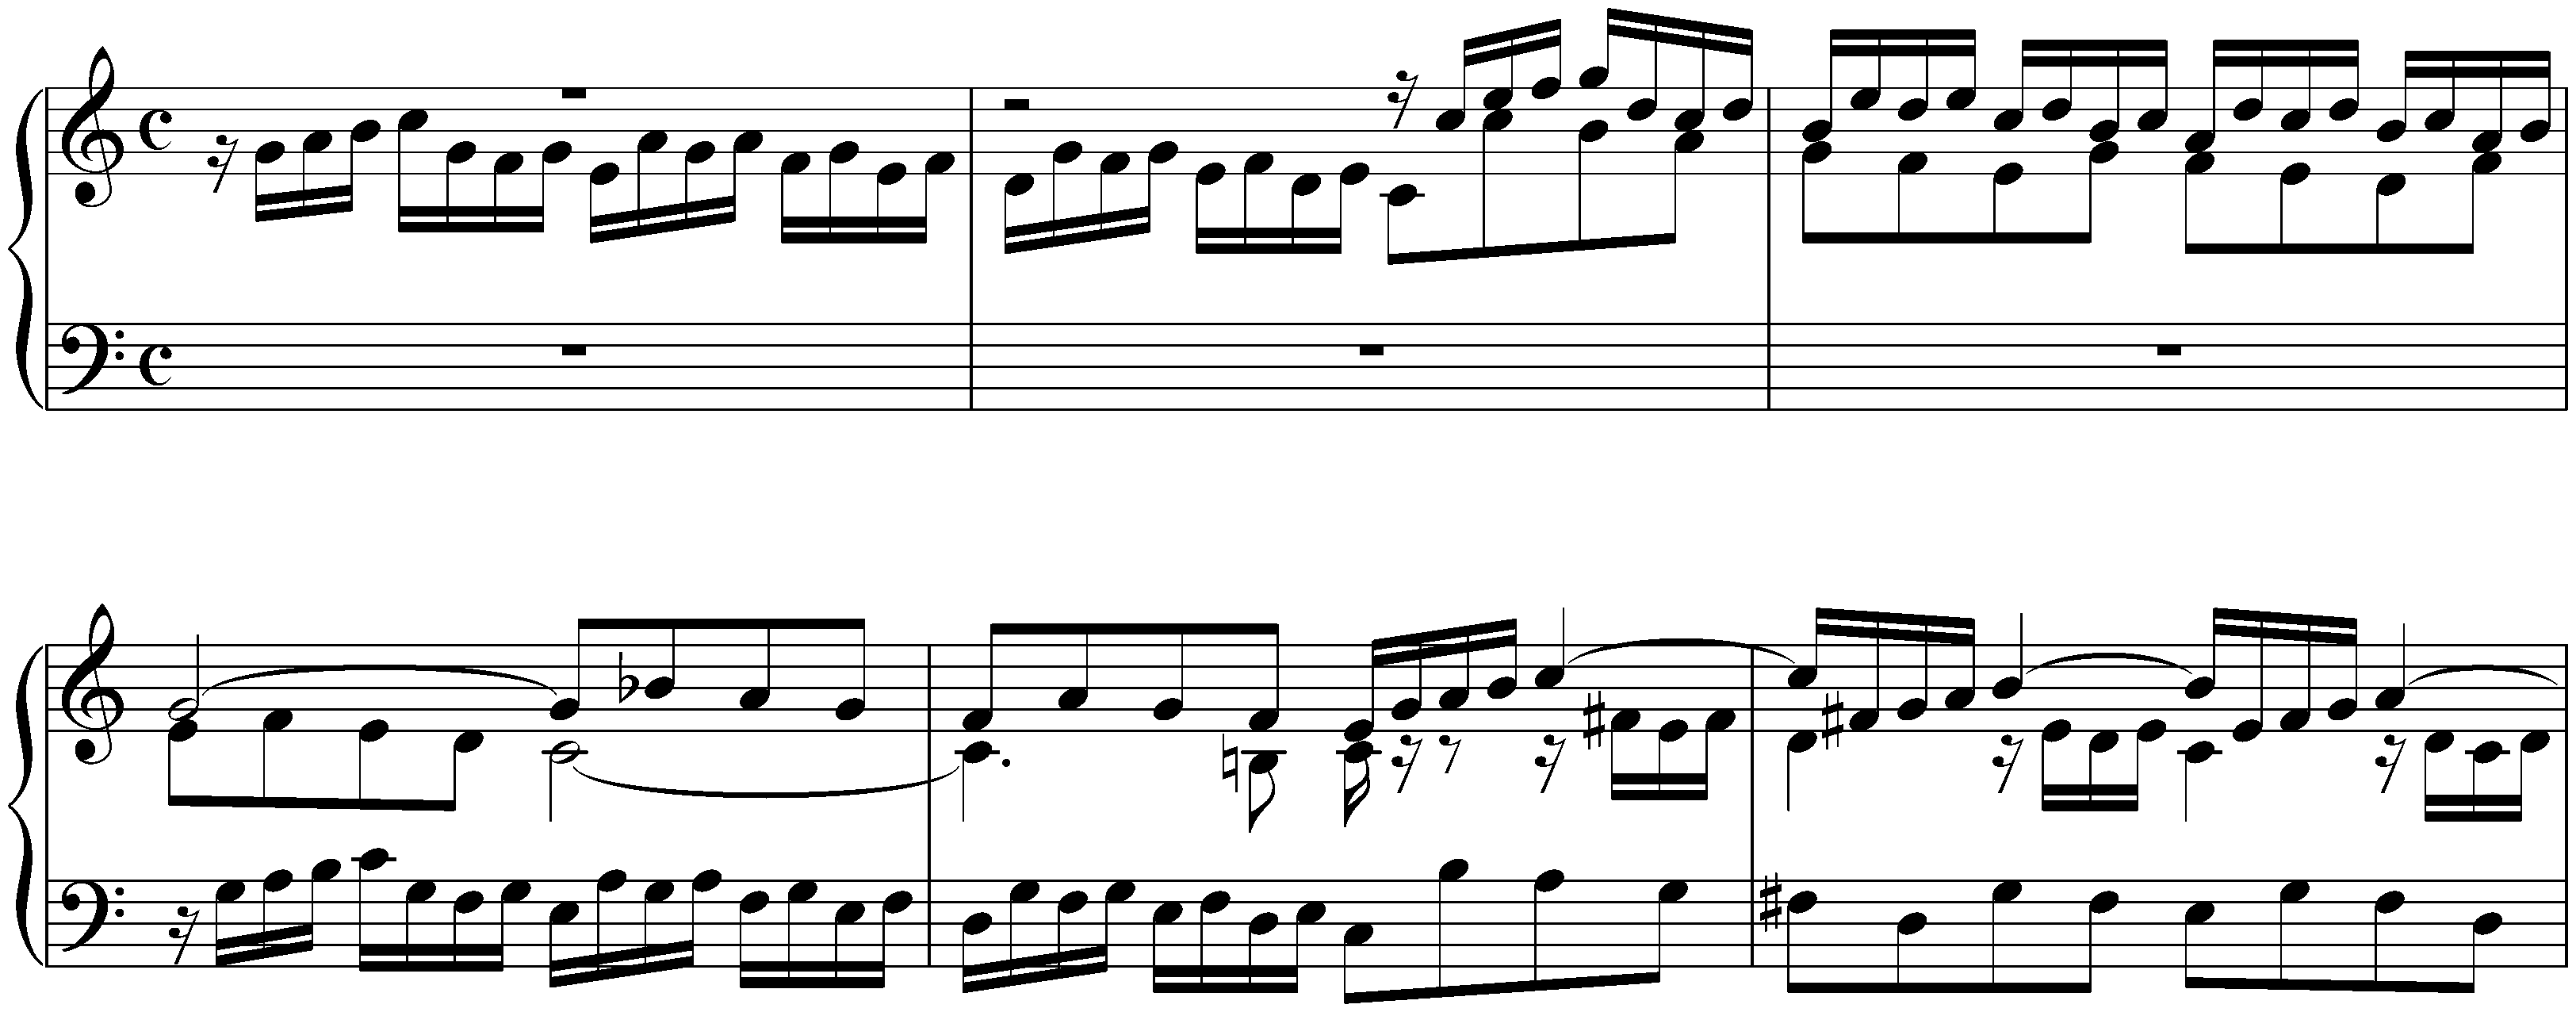 Fugue in C major, BWV 952